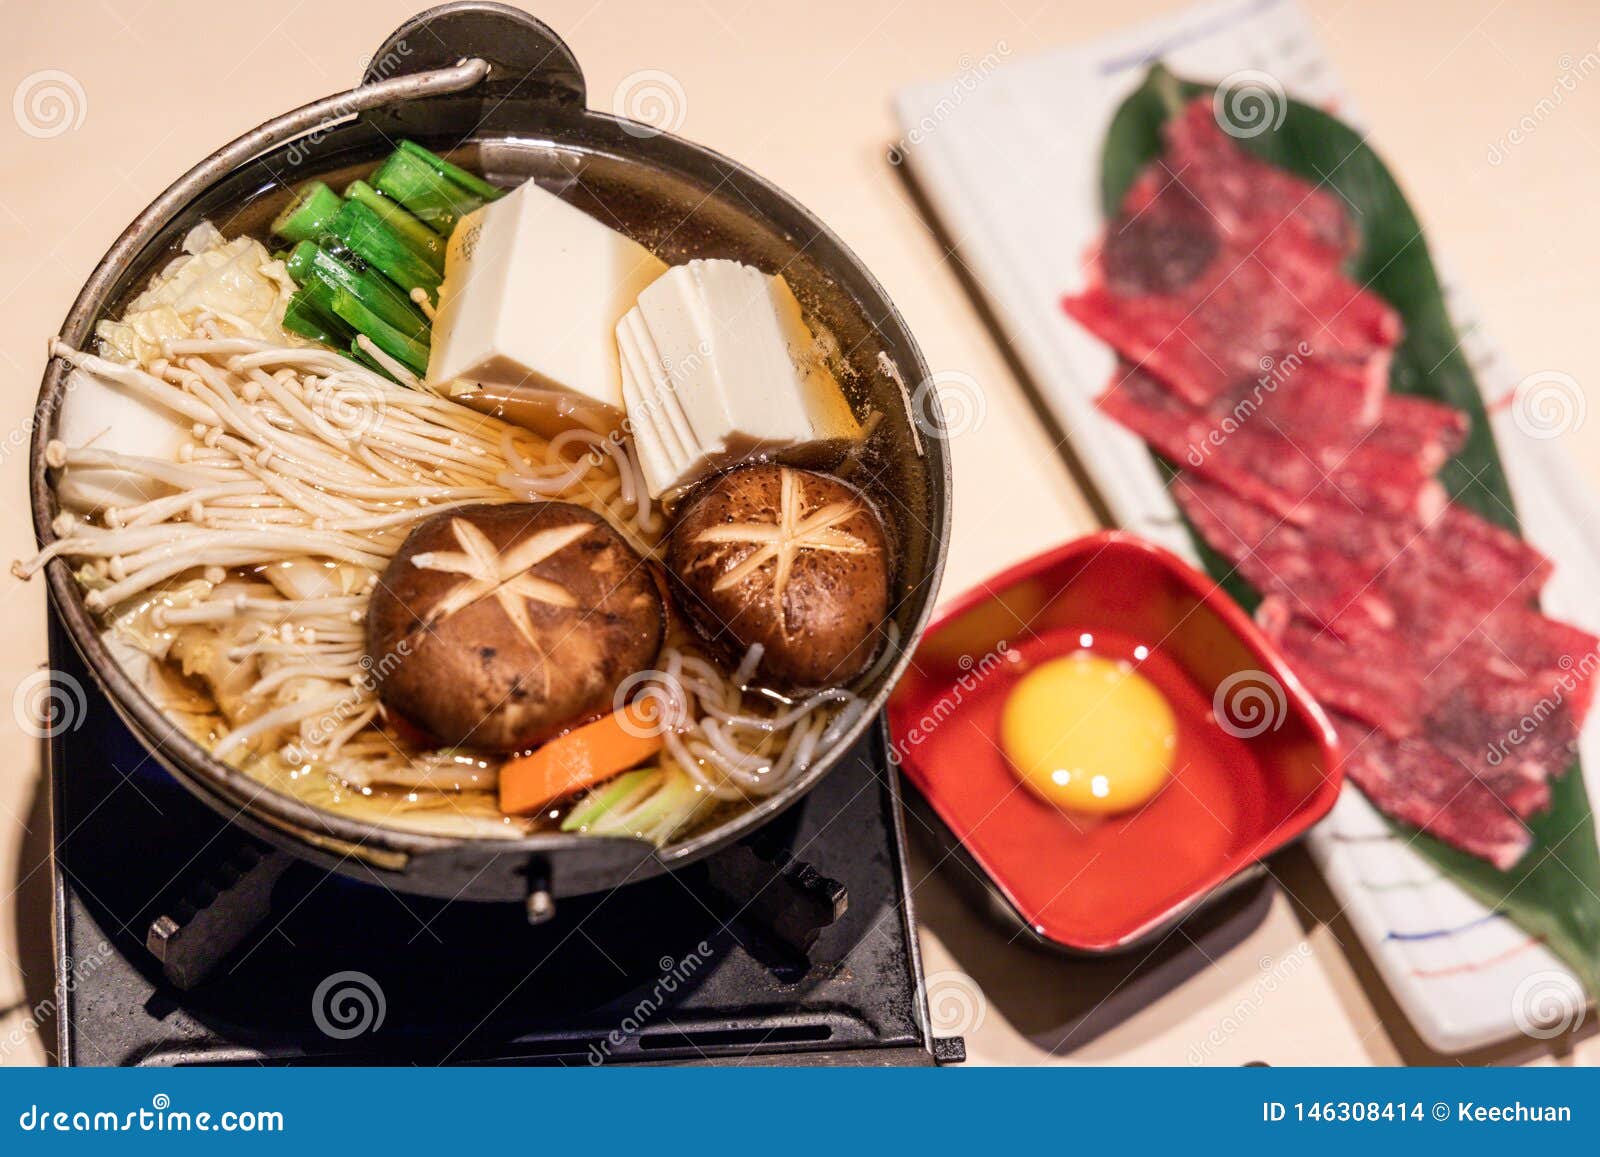 https://thumbs.dreamstime.com/z/japanese-sukiyaki-hot-pot-vegetable-beef-slice-raw-egg-served-table-146308414.jpg